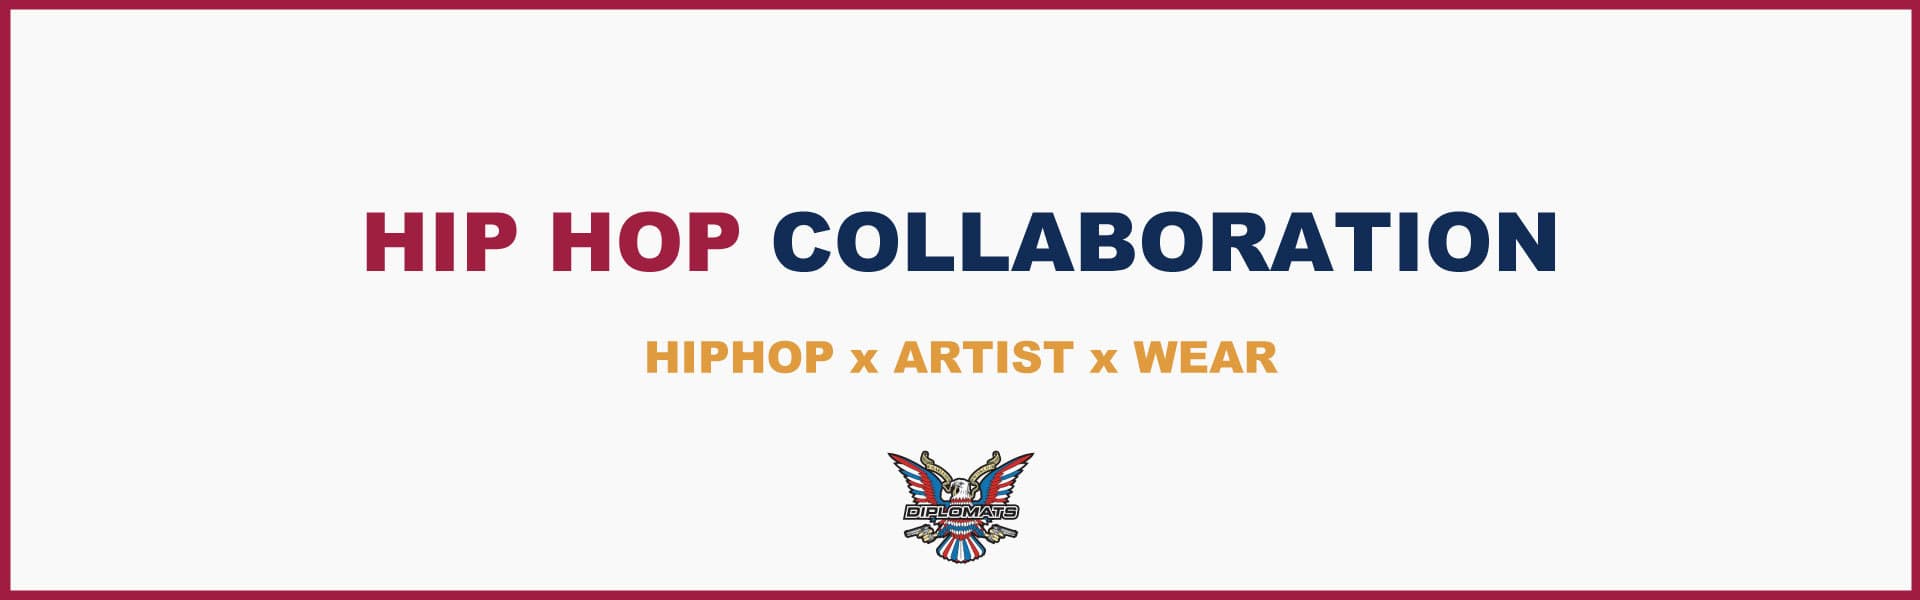 hiphop collaboration